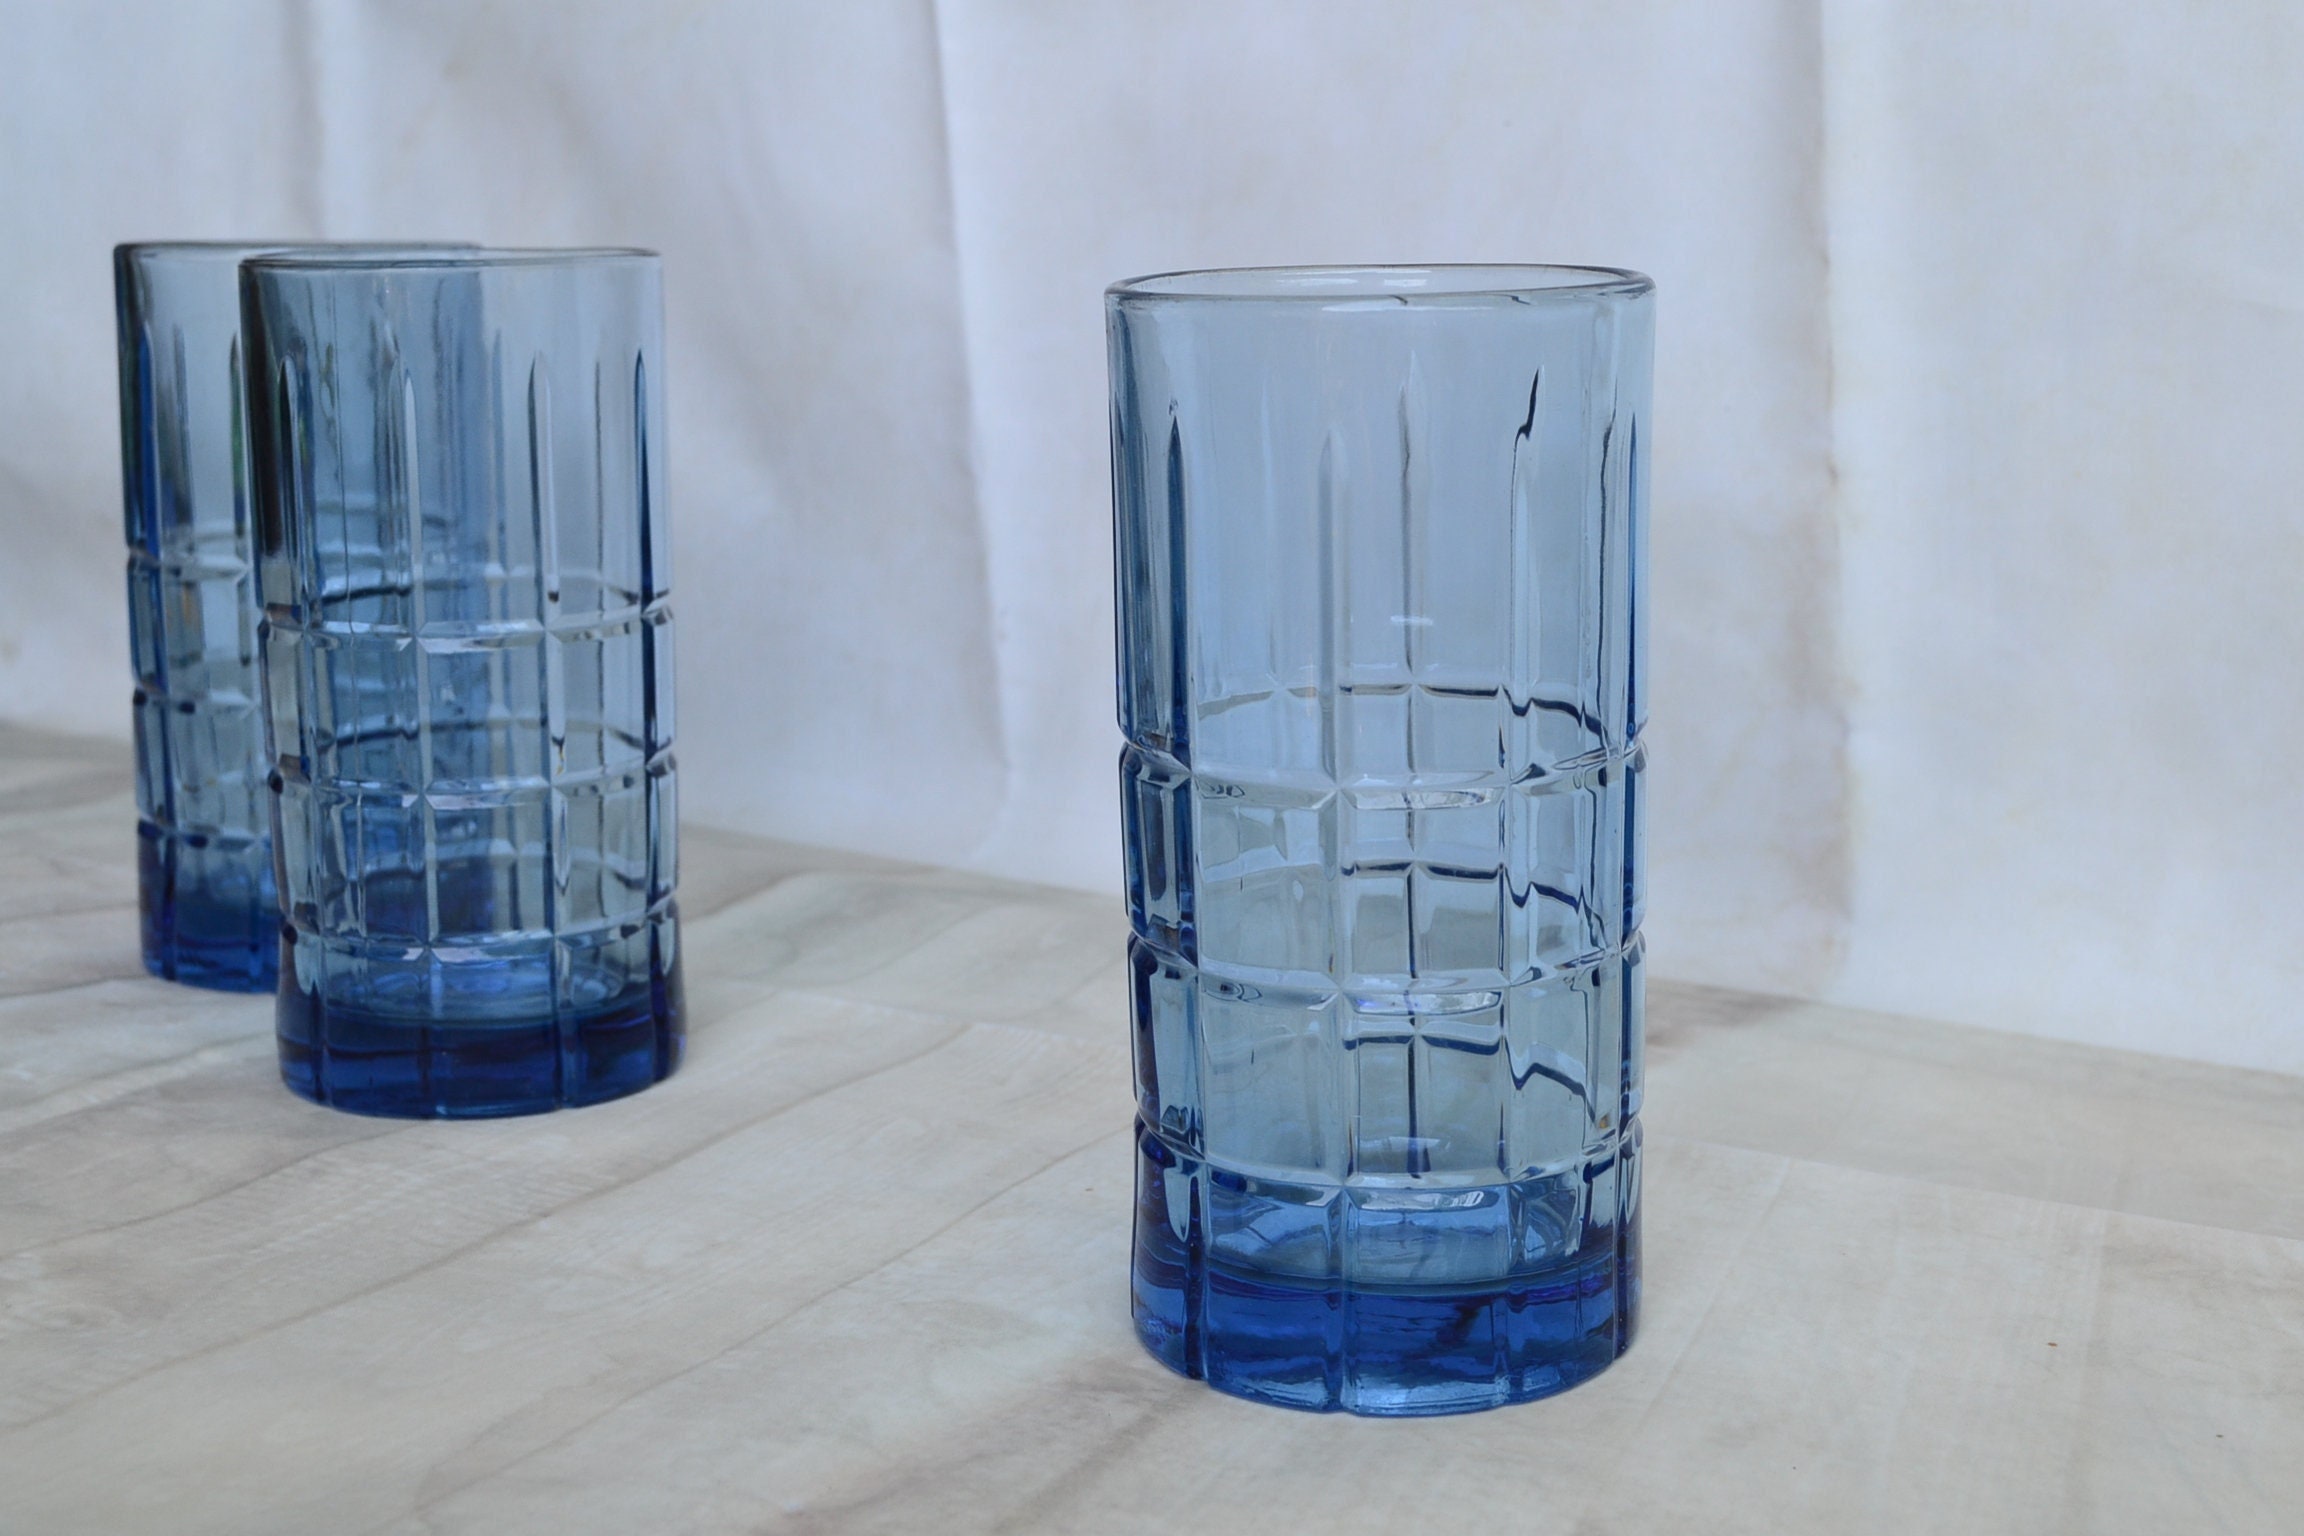 Anchor Hocking Flat Denim Blue Ice Tea Glasses - Set of 4